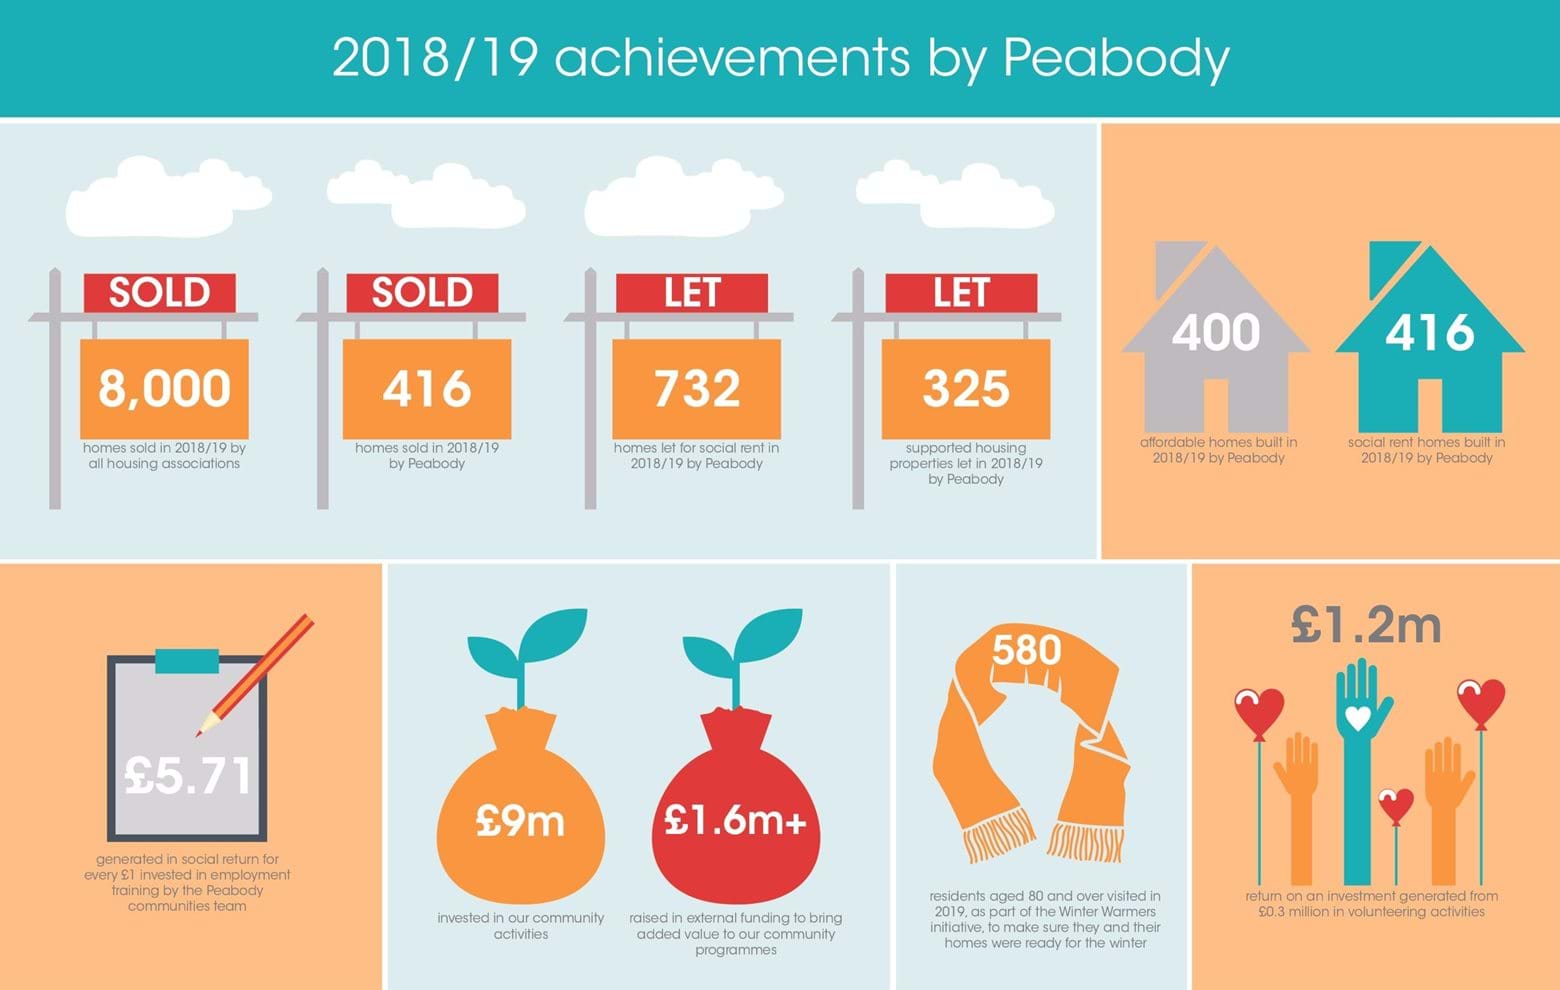 Peabody achievements over 2018/19